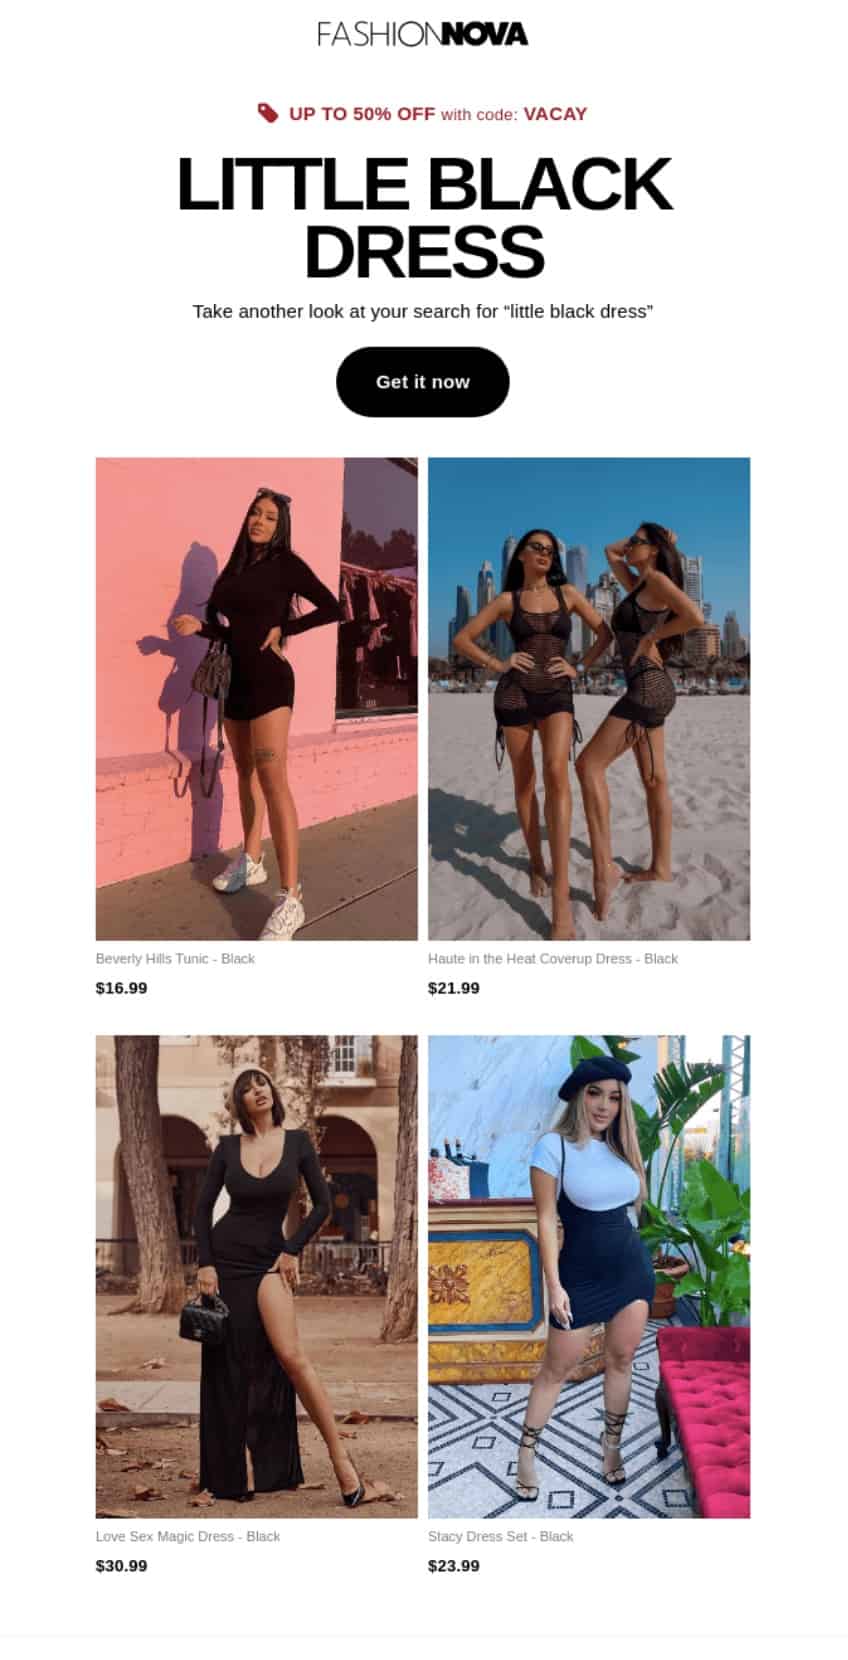 Fashion Nova upsell email example for eCommerce